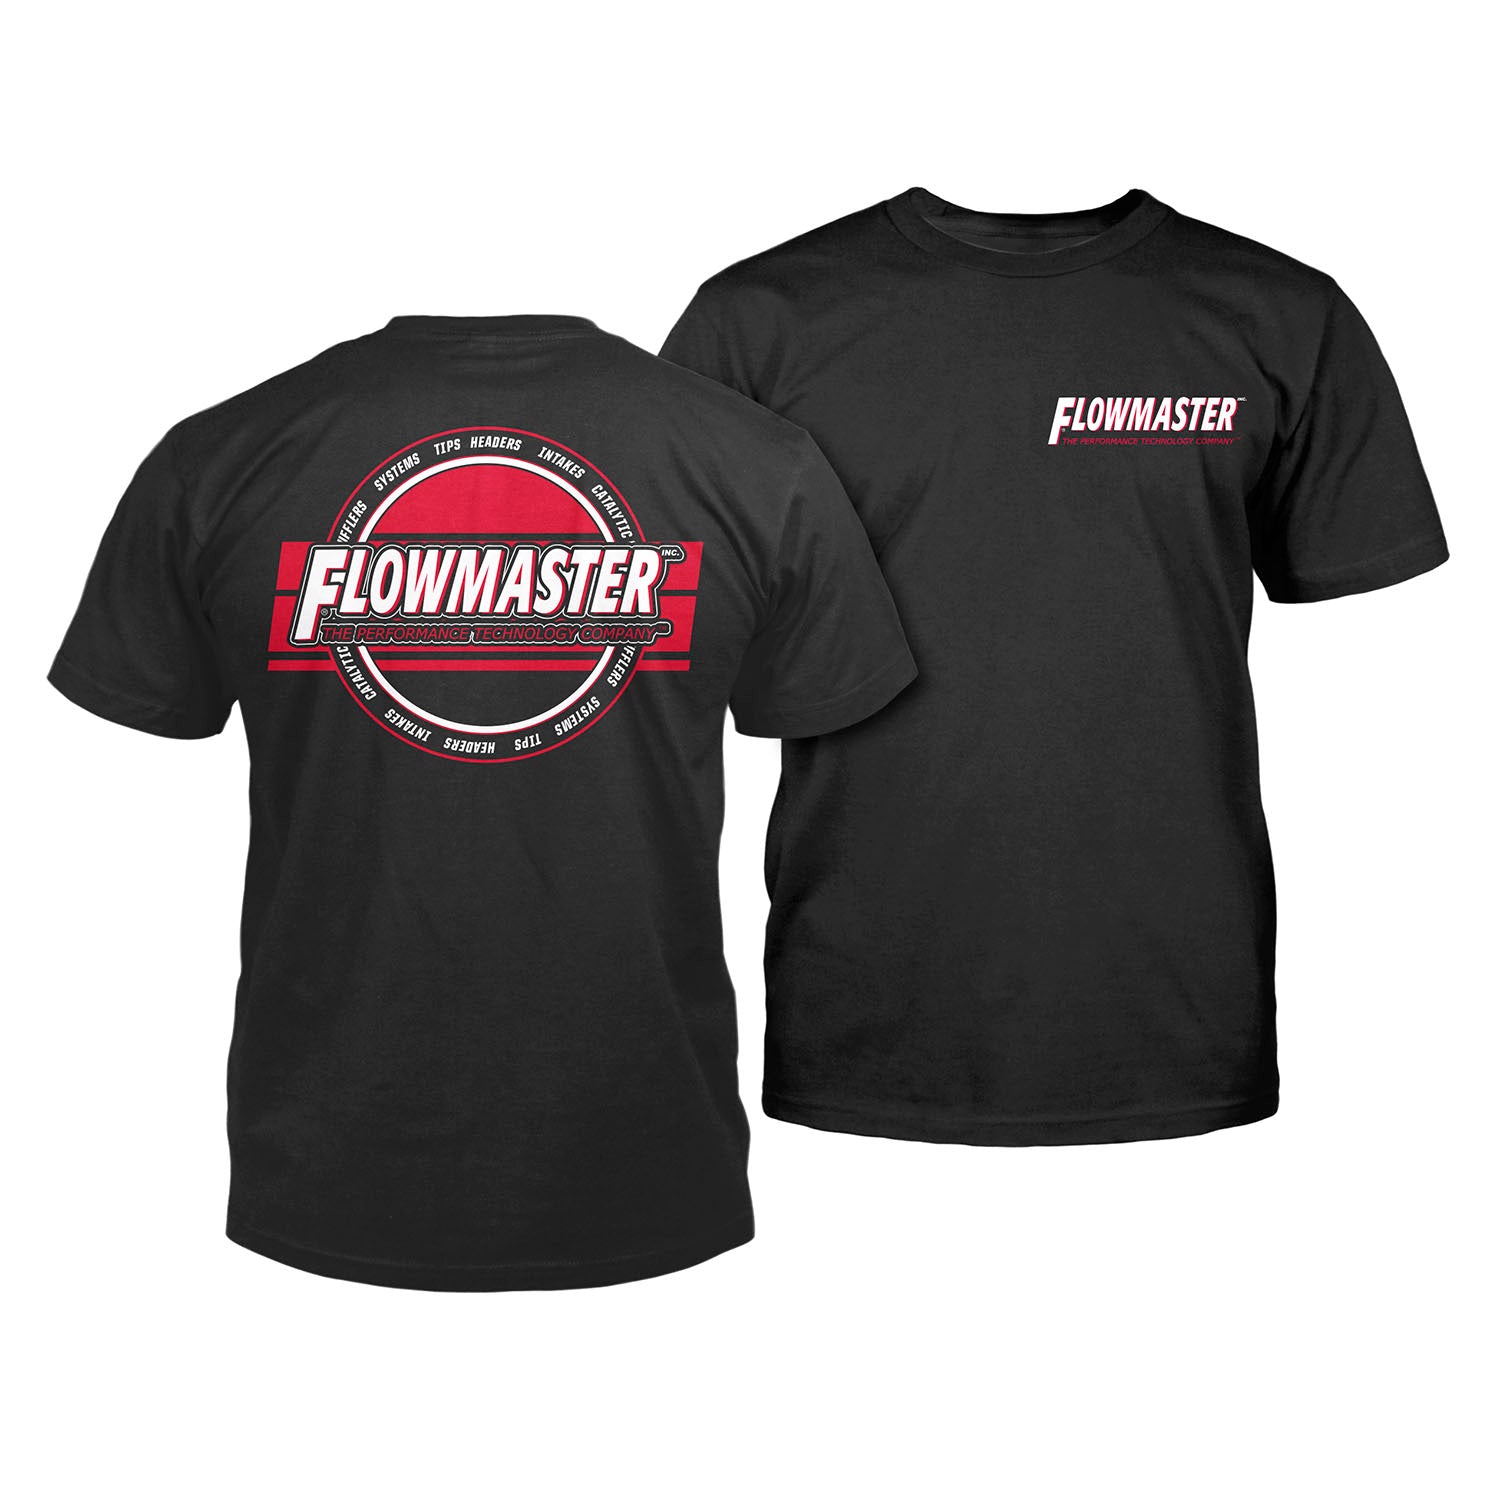 Flowmaster T-Shirt 610354